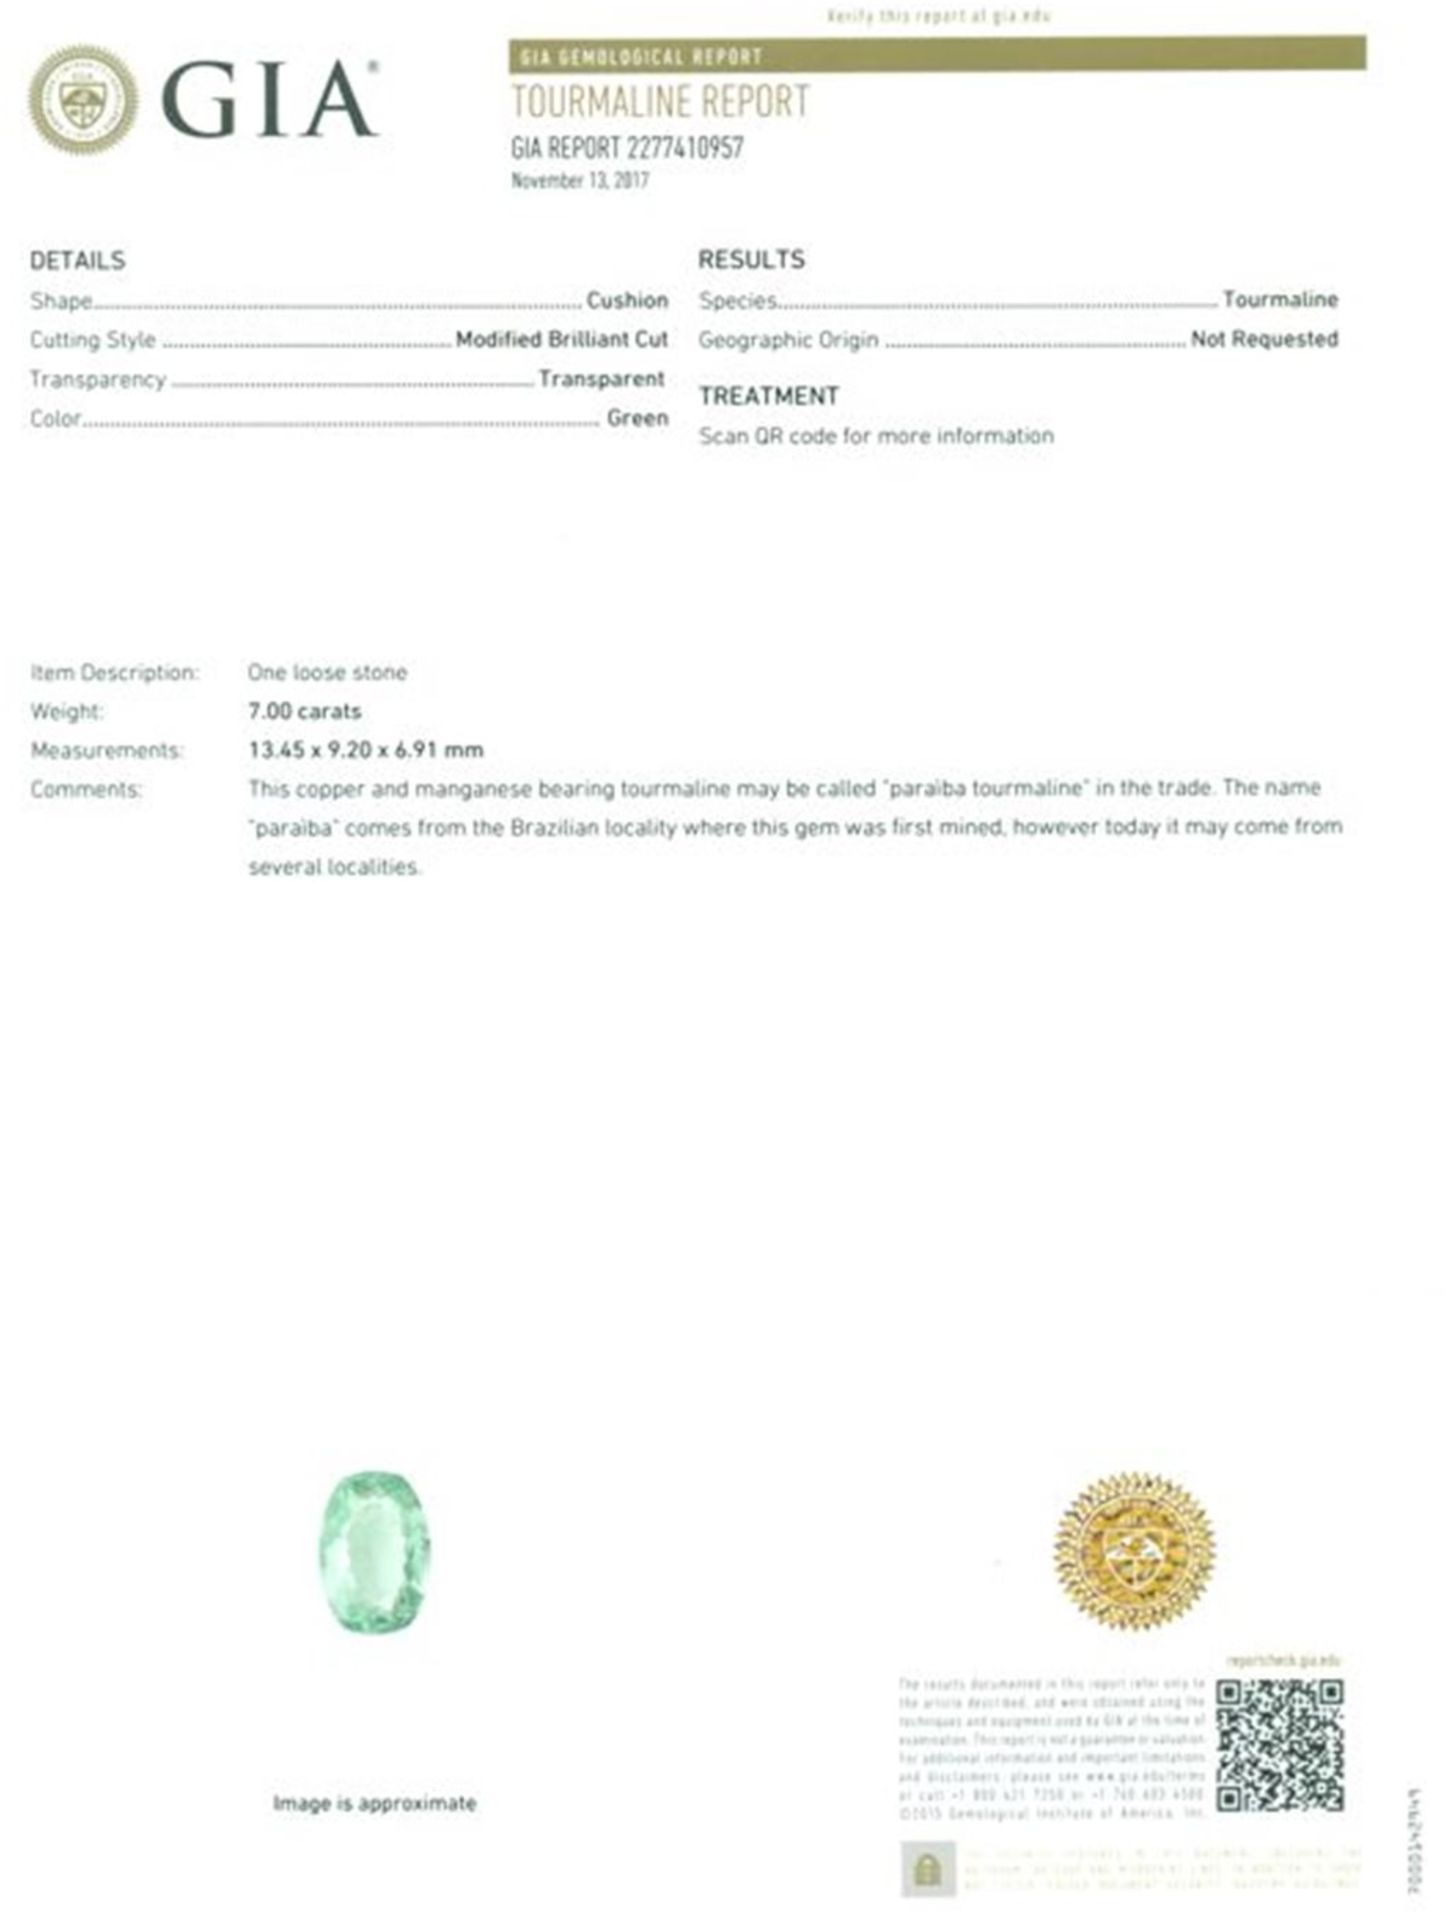 GIA Certified 7.00 ct. Neon Green Paraiba Tourmaline BRAZIL - Image 2 of 6